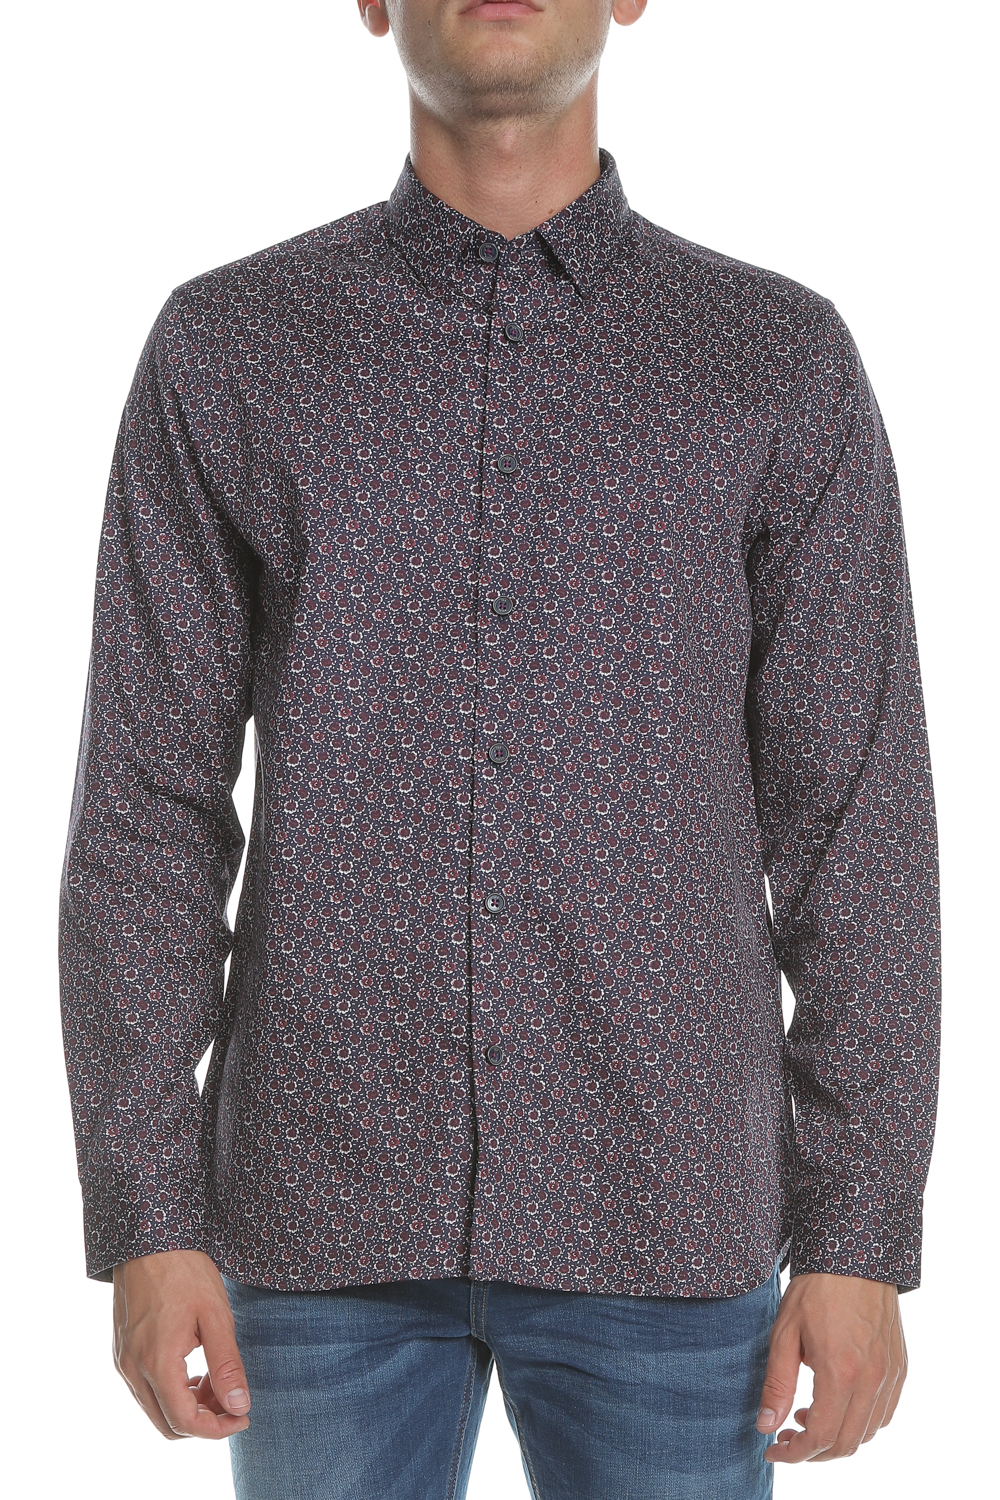 TED BAKER - Ανδρικό μακρυμάνικο πουκάμισο THORNTO LS μοβ με φλοράλ μοτίβο Ανδρικά/Ρούχα/Πουκάμισα/Μακρυμάνικα